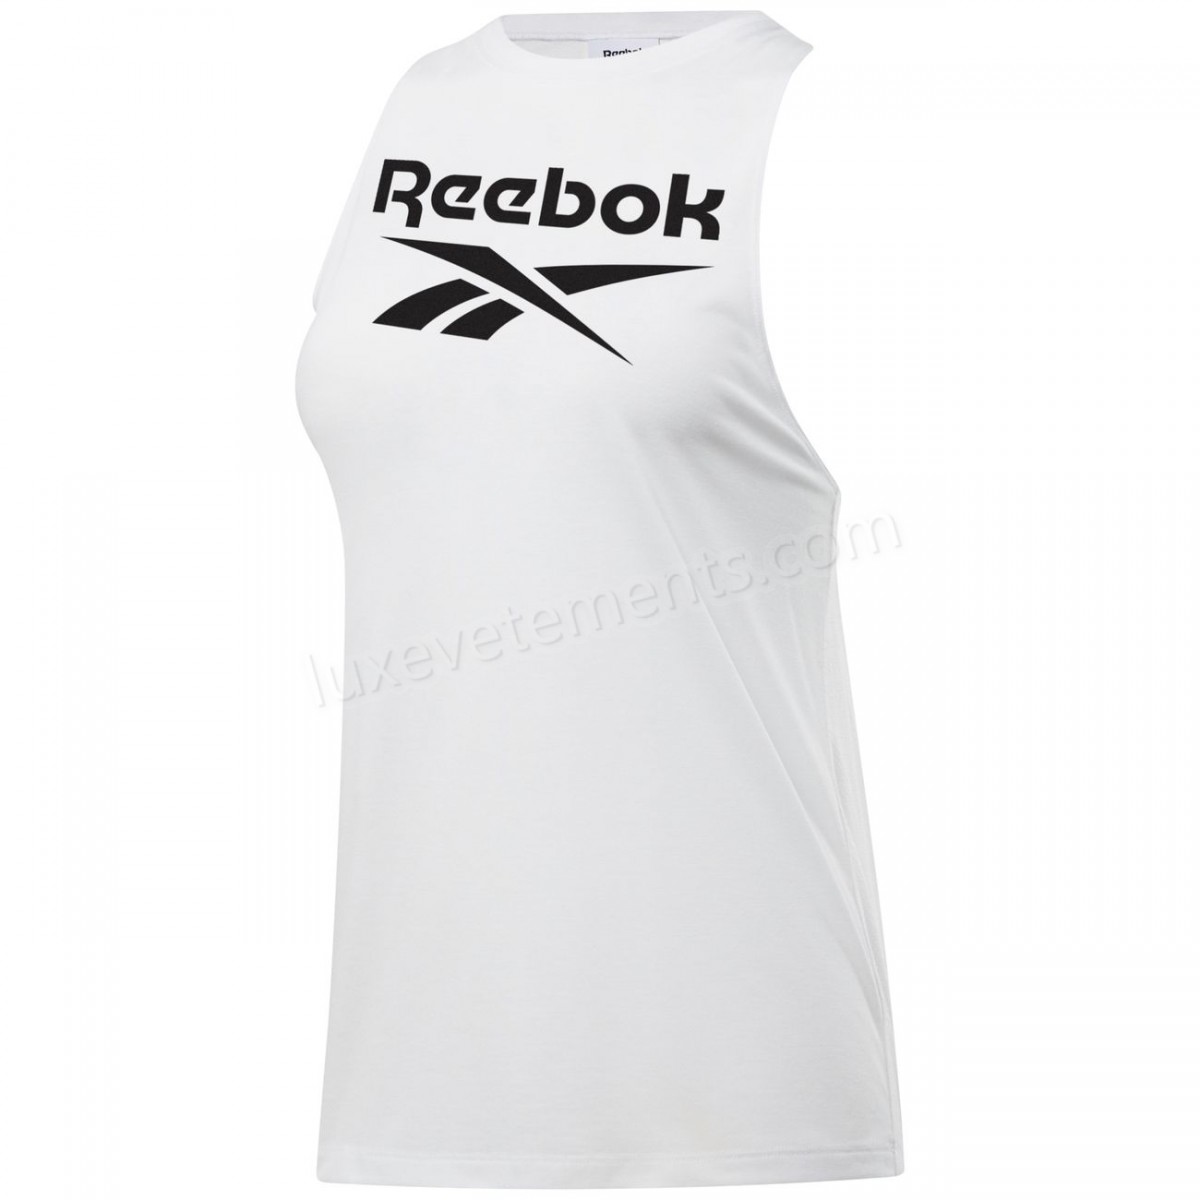 Reebok-Fitness femme REEBOK Débardeur femme Reebok Workout Ready Supremium BL Vente en ligne - -1